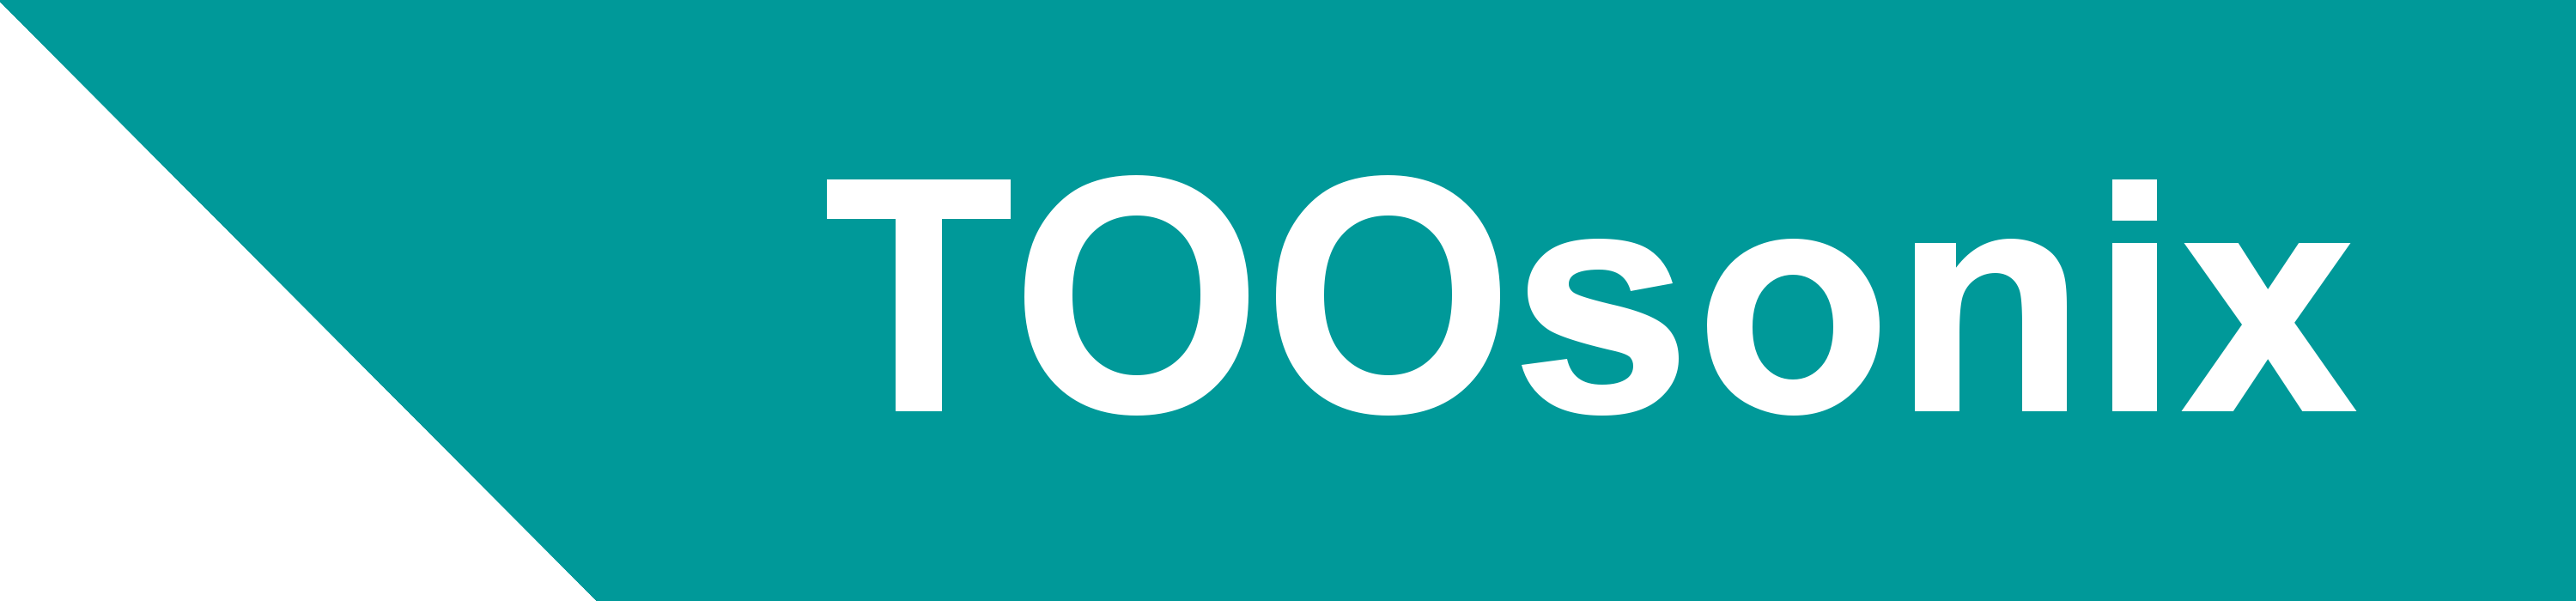 logo toosonix